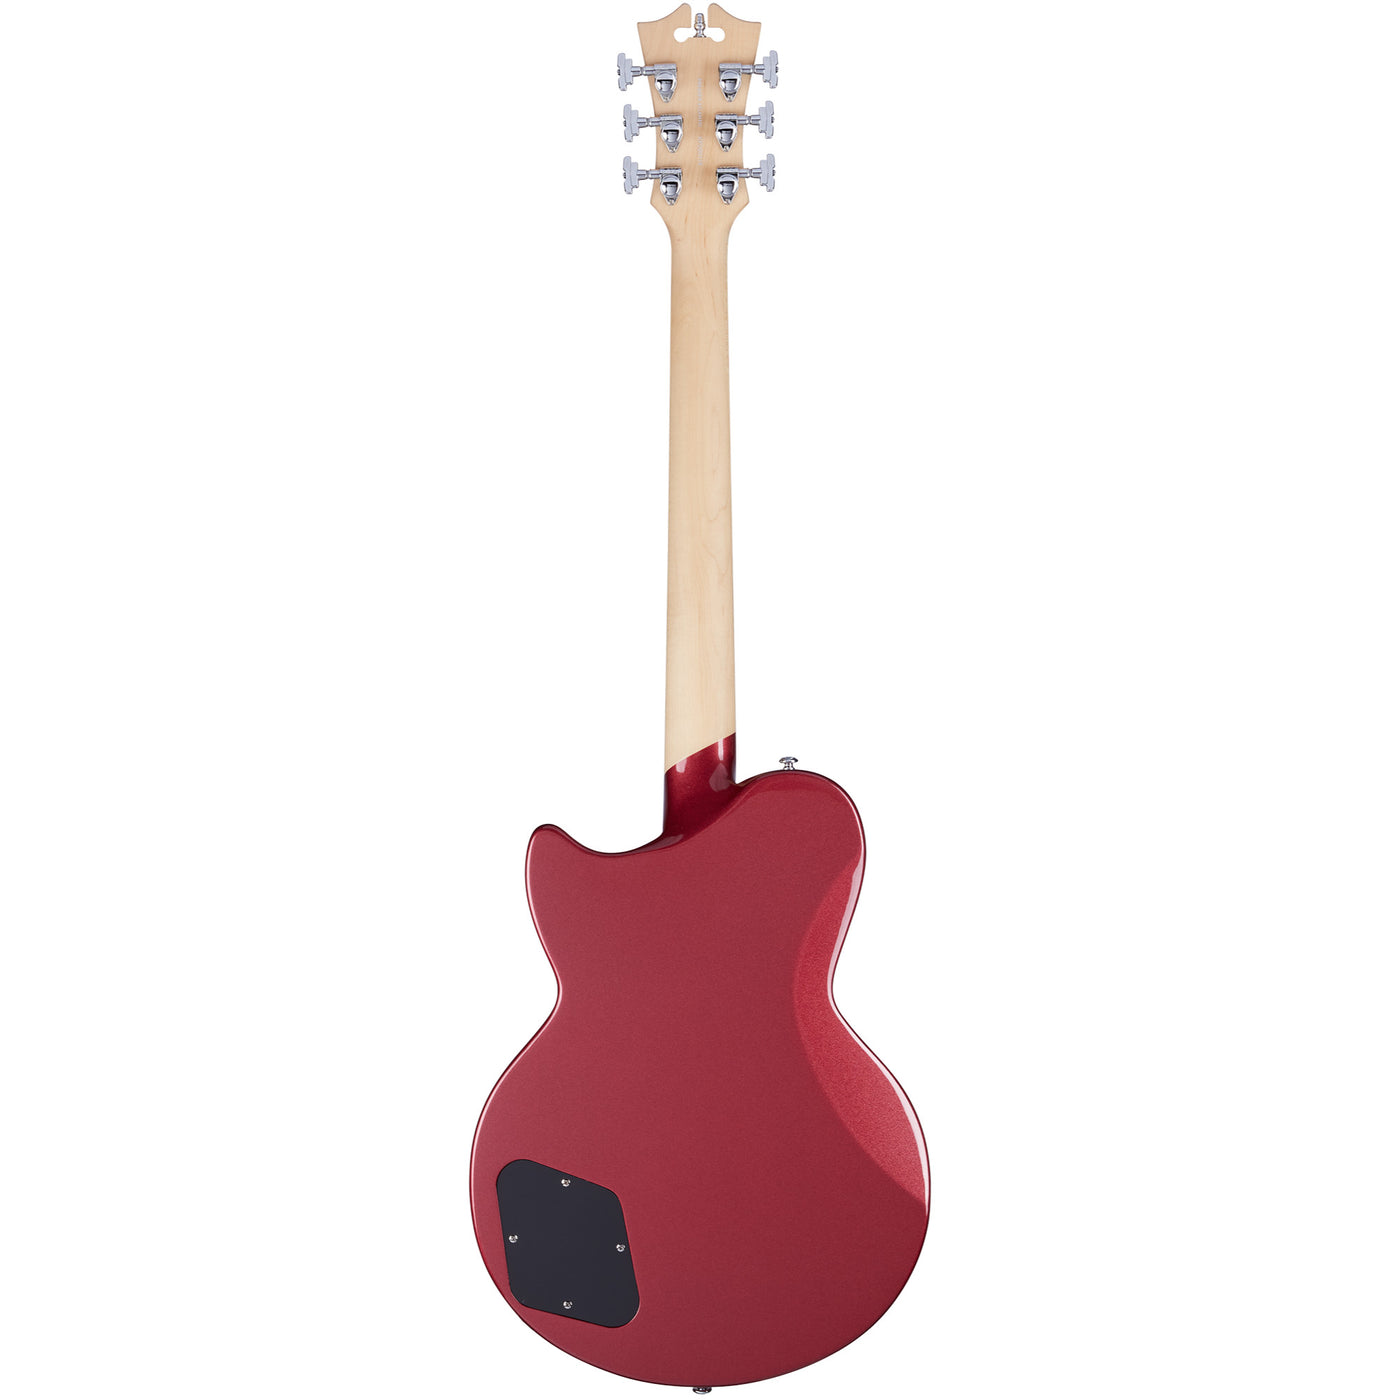 D'Angelico Premier Atlantic Electric Guitar with Stopbar Tailpiece, Oxblood (DAPATLOXBCS)